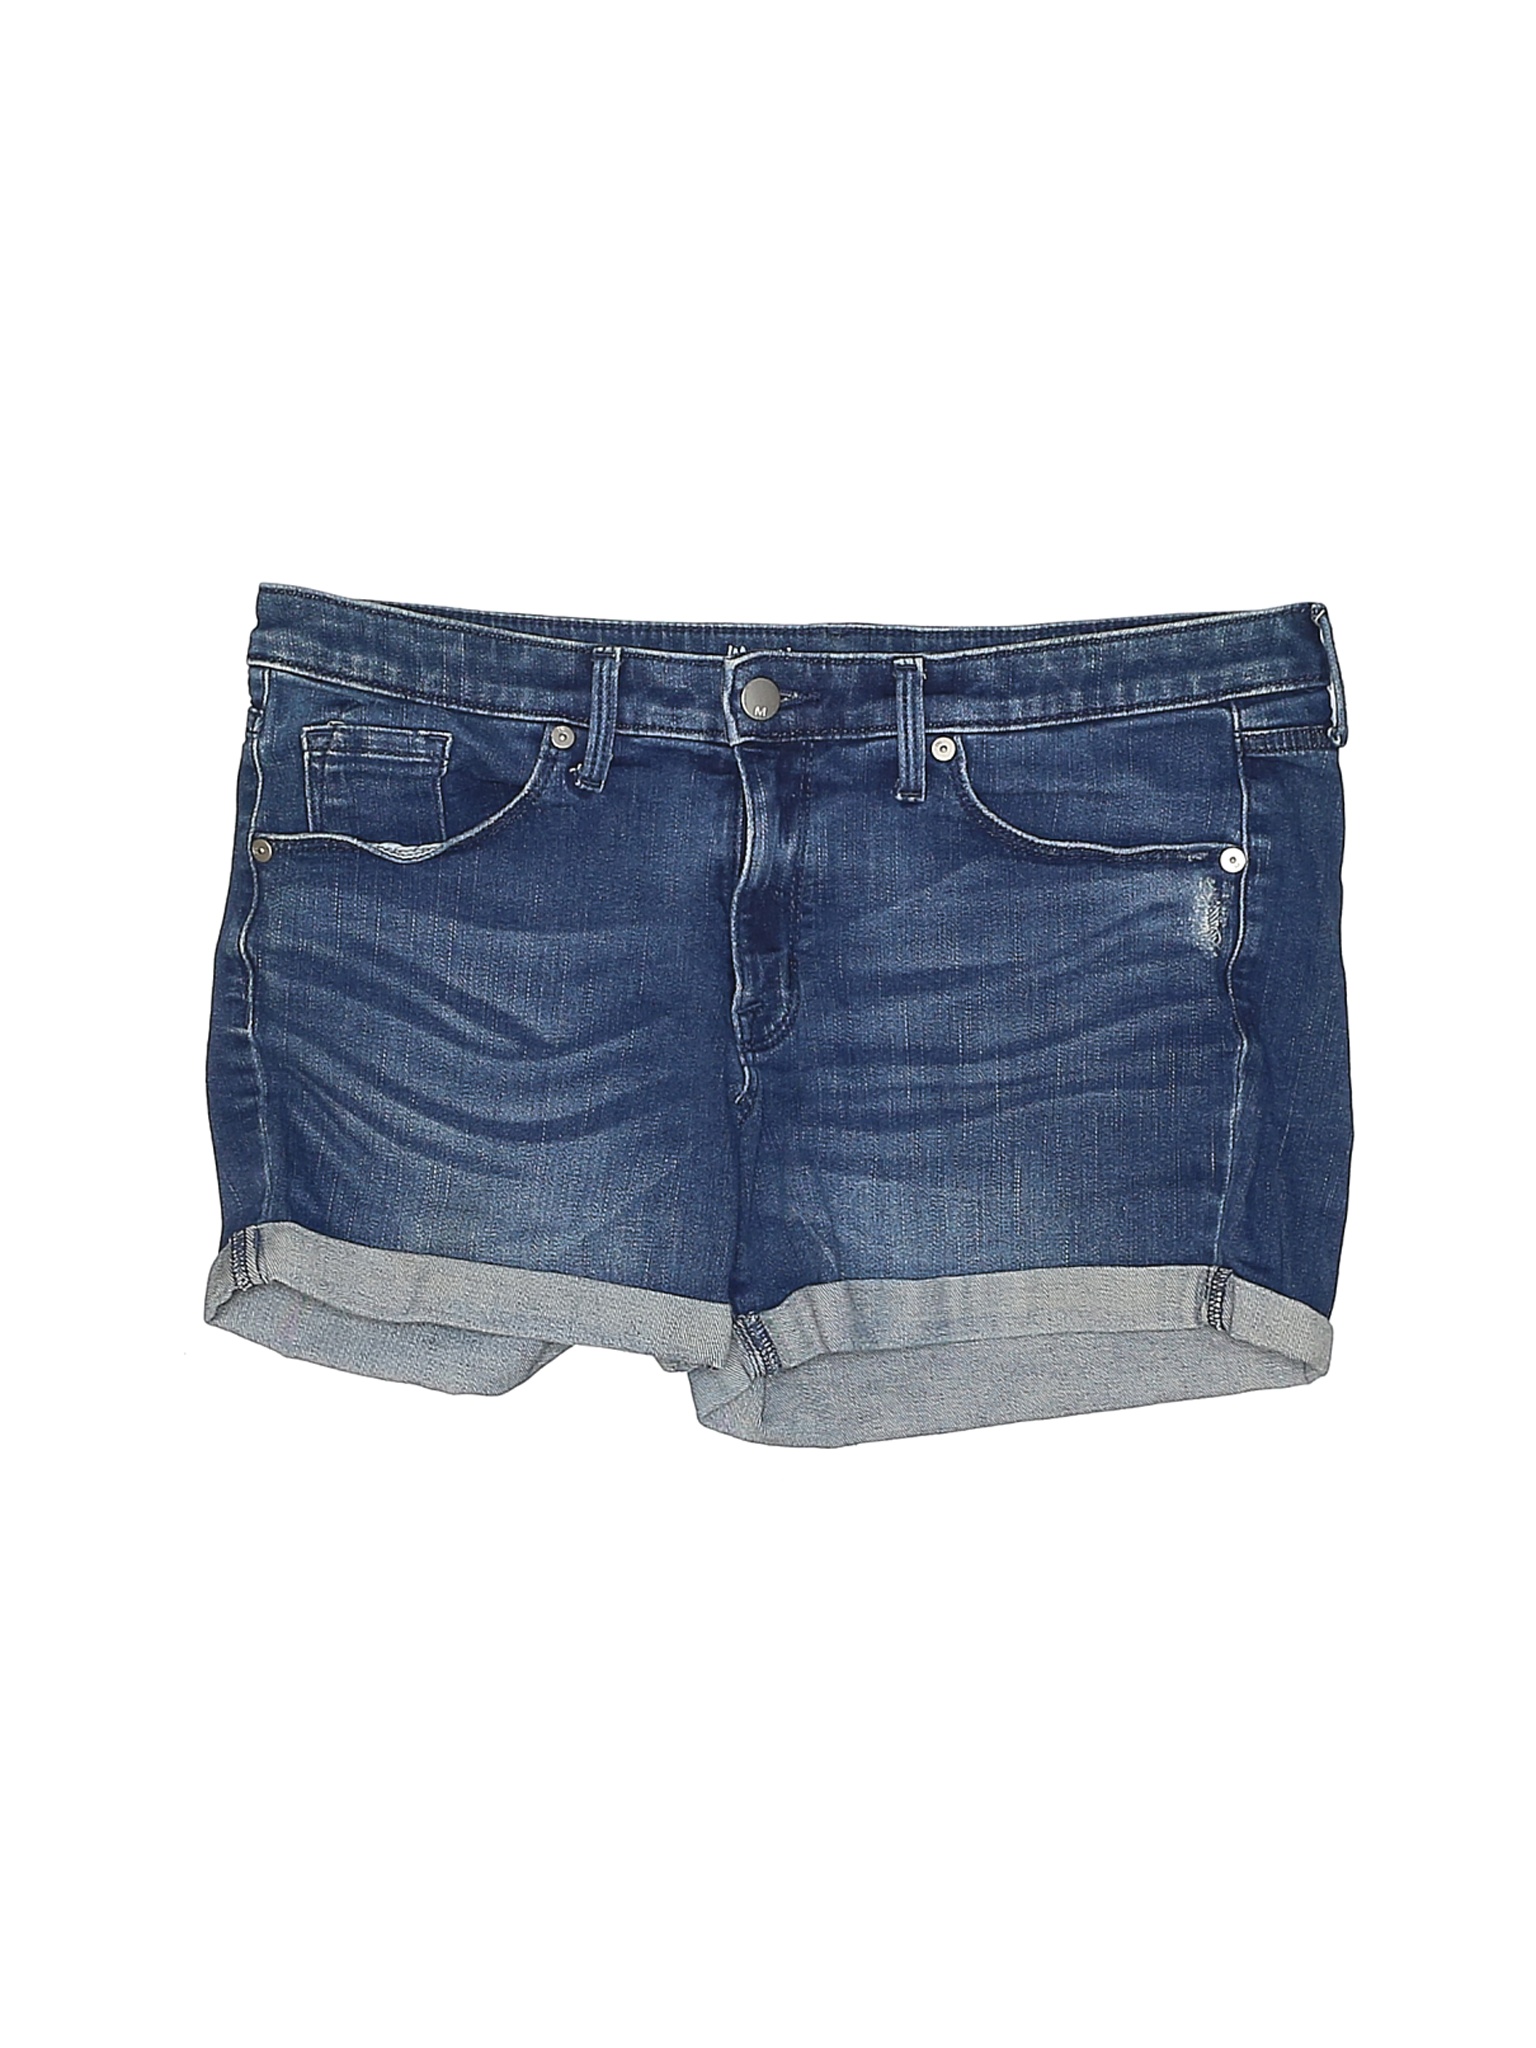 Mossimo Women Blue Denim Shorts 8 | eBay